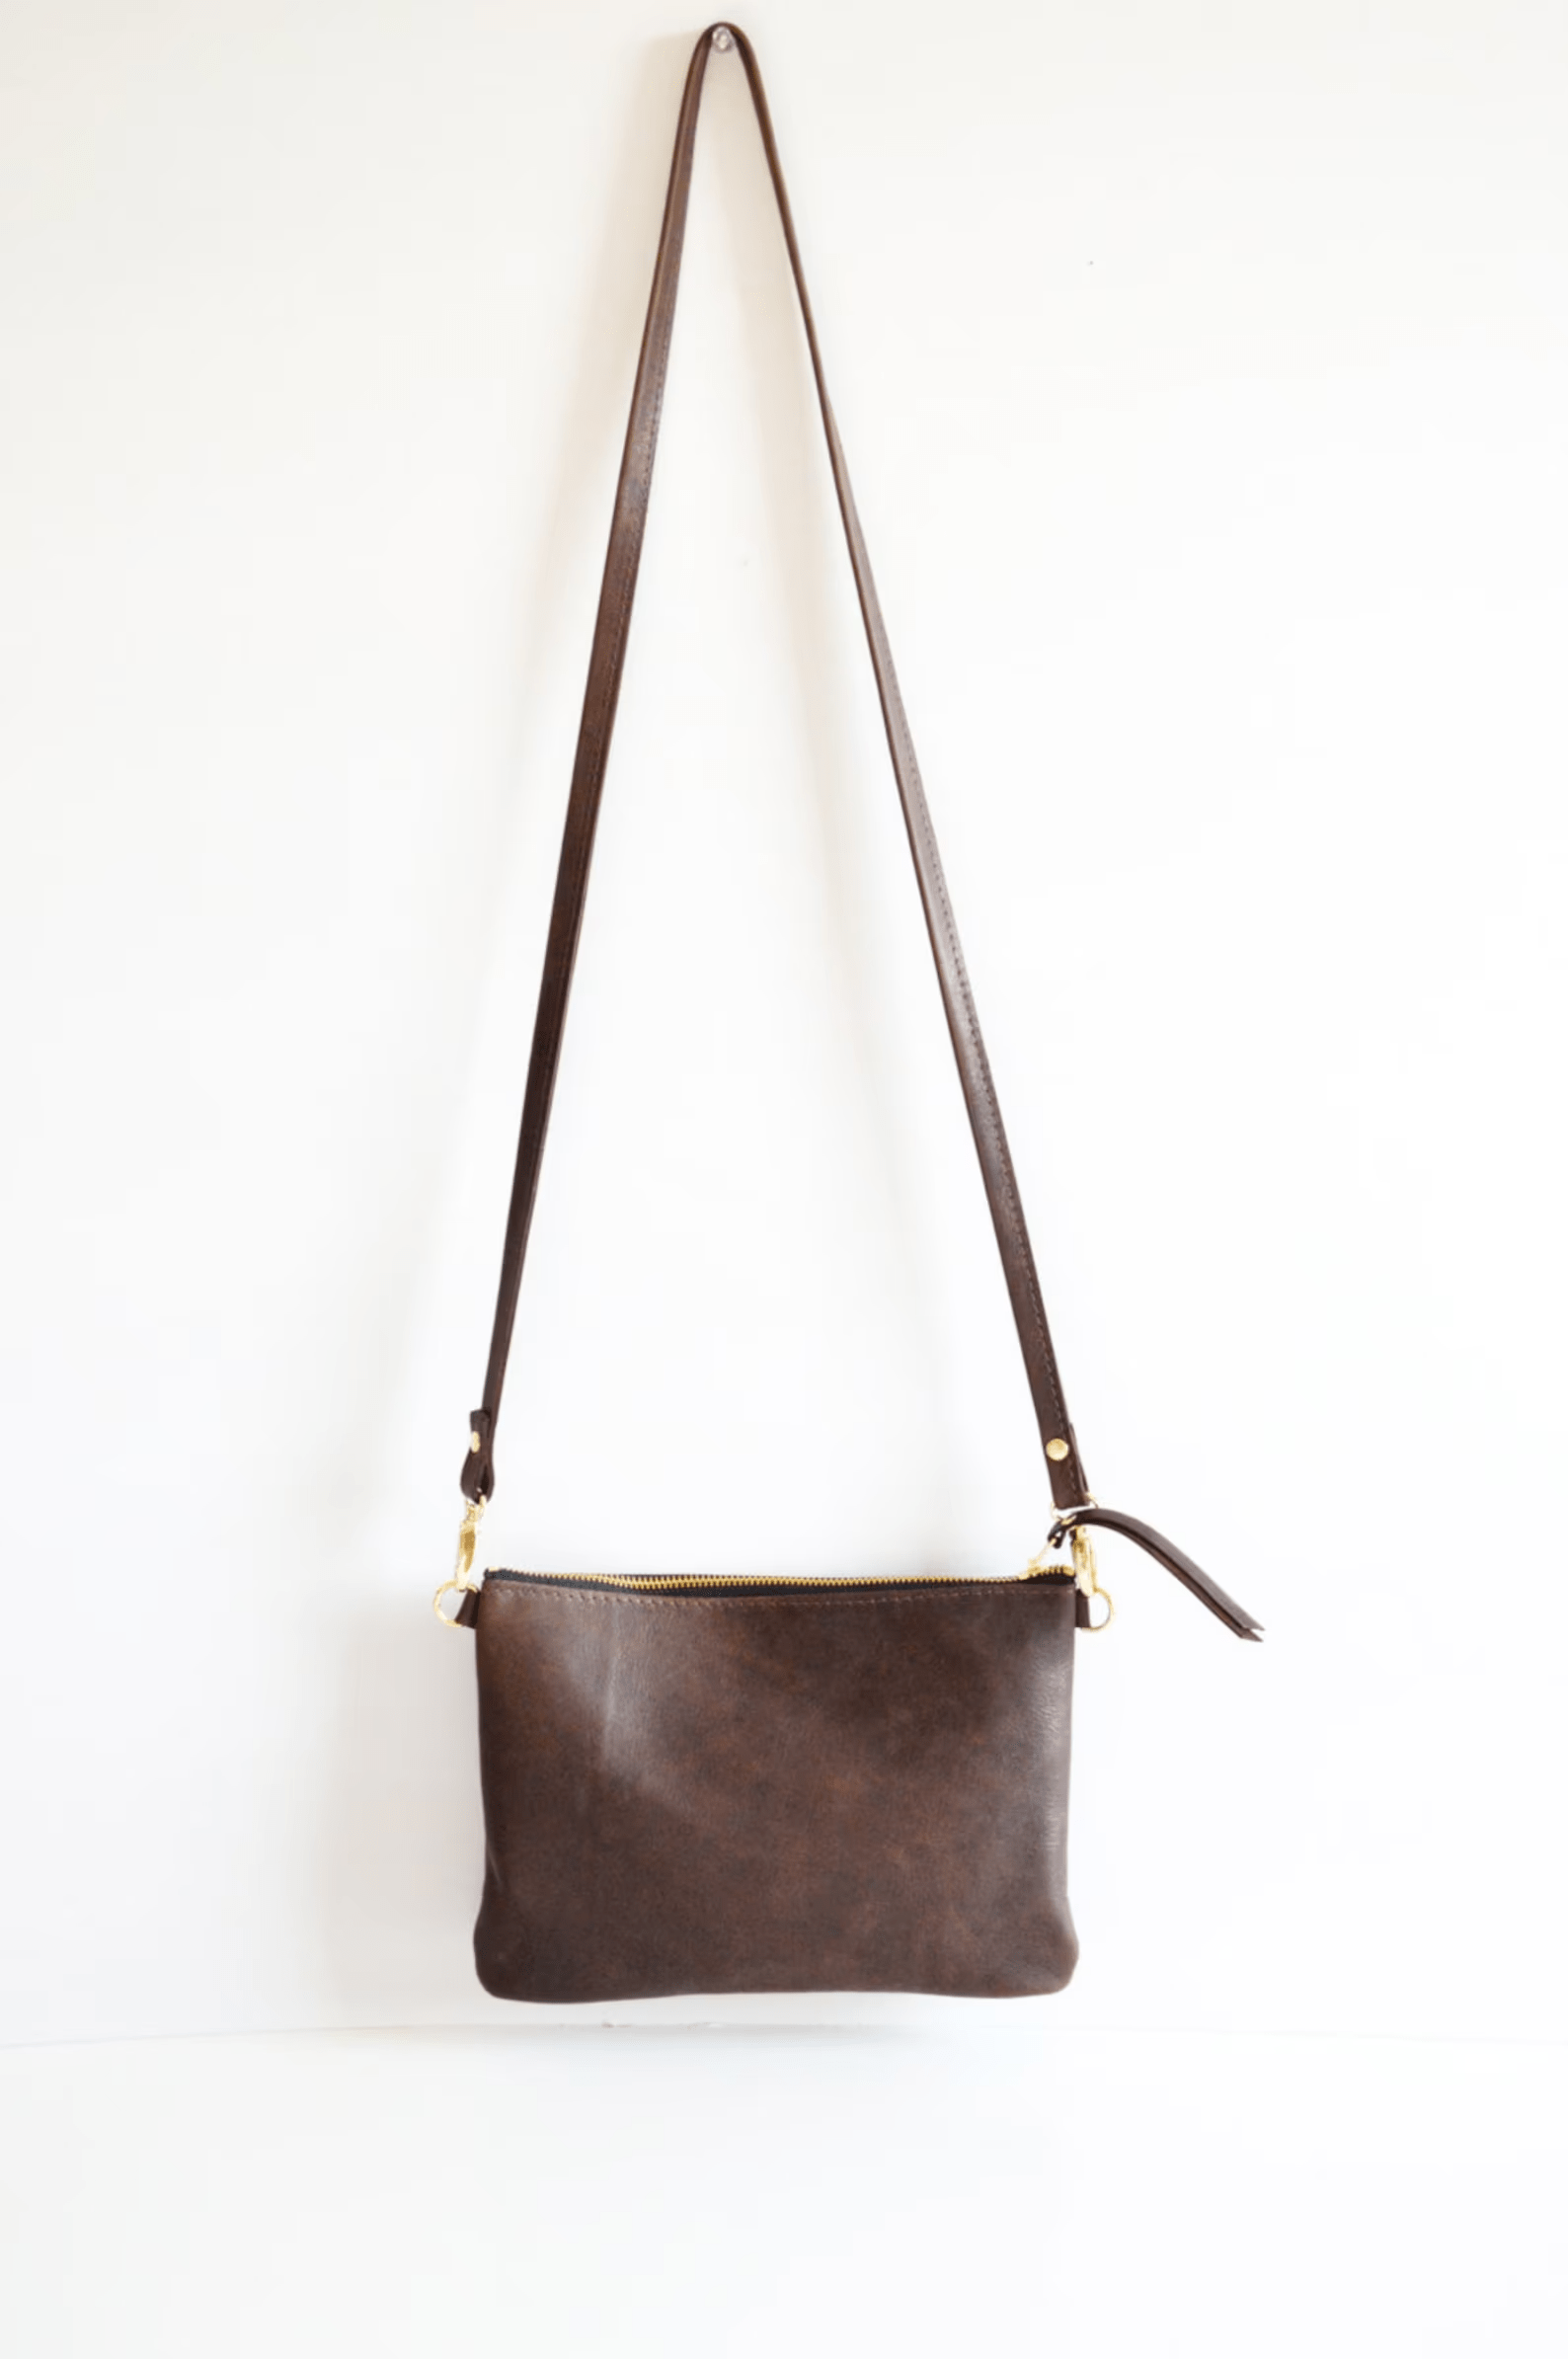 Kinnoti's Black Genuine Leather Sling Bag For Women With Adjustable Brass Chain & Shoulder Pad